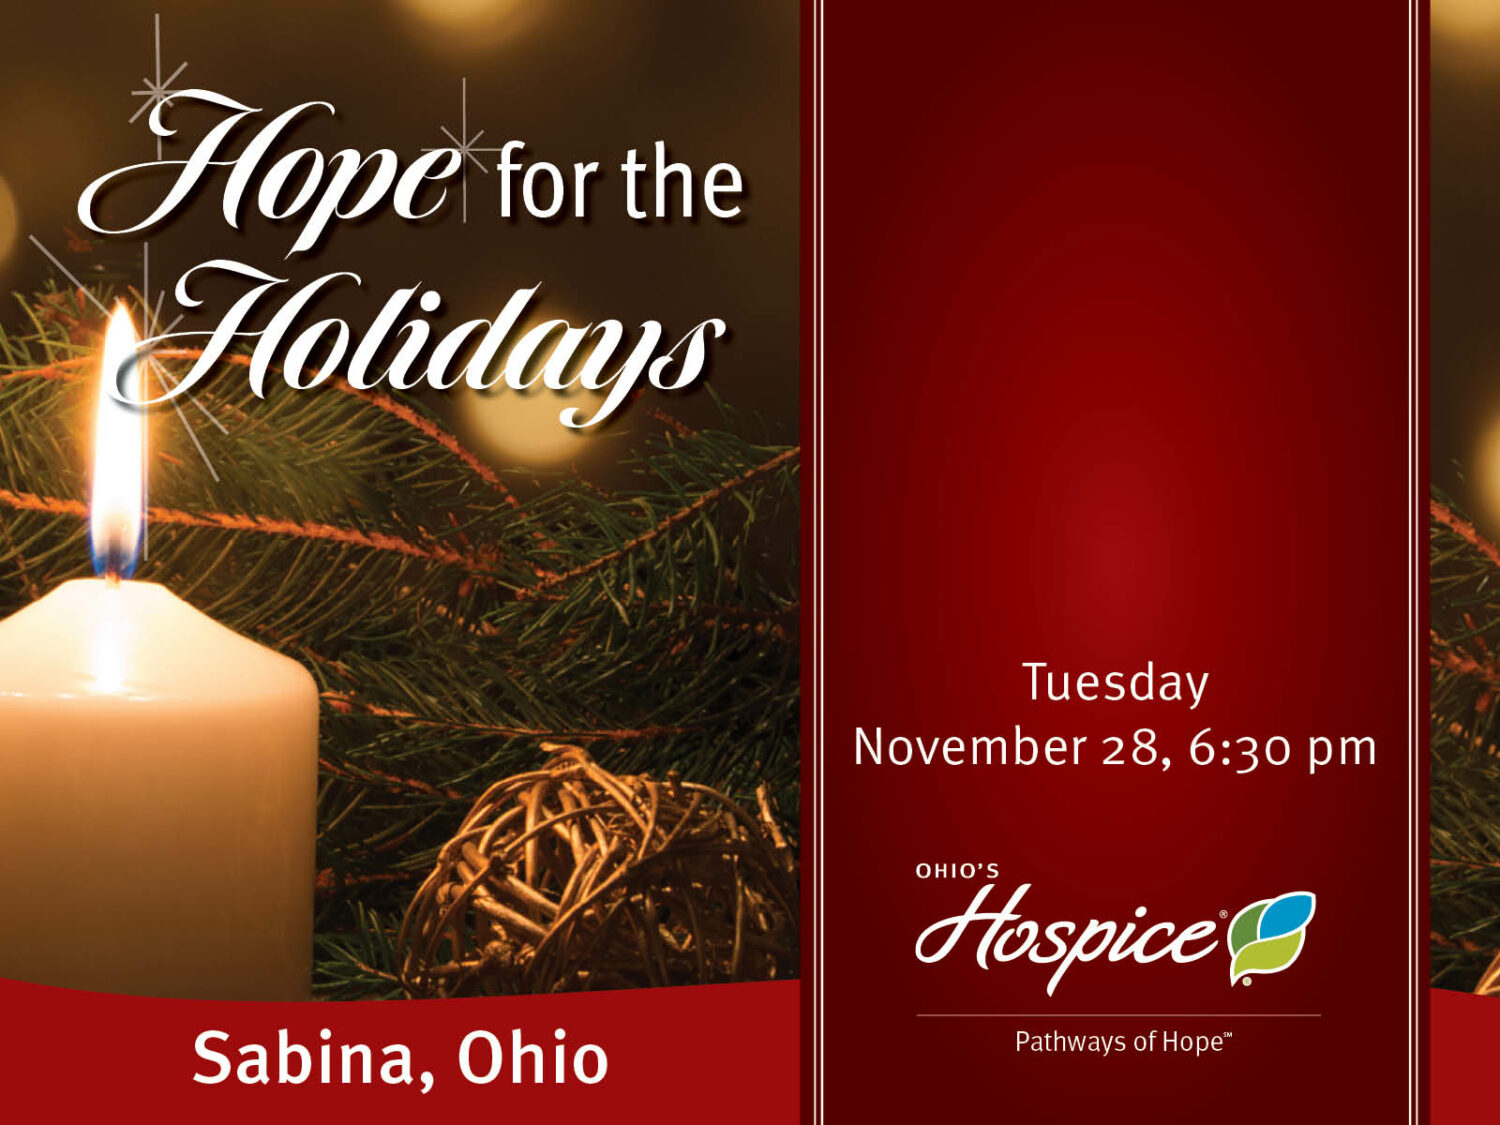 Hope for the Holidays. Tuesday, November 28, 6:30 pm. Ohio's Hospice Pathways of Hope